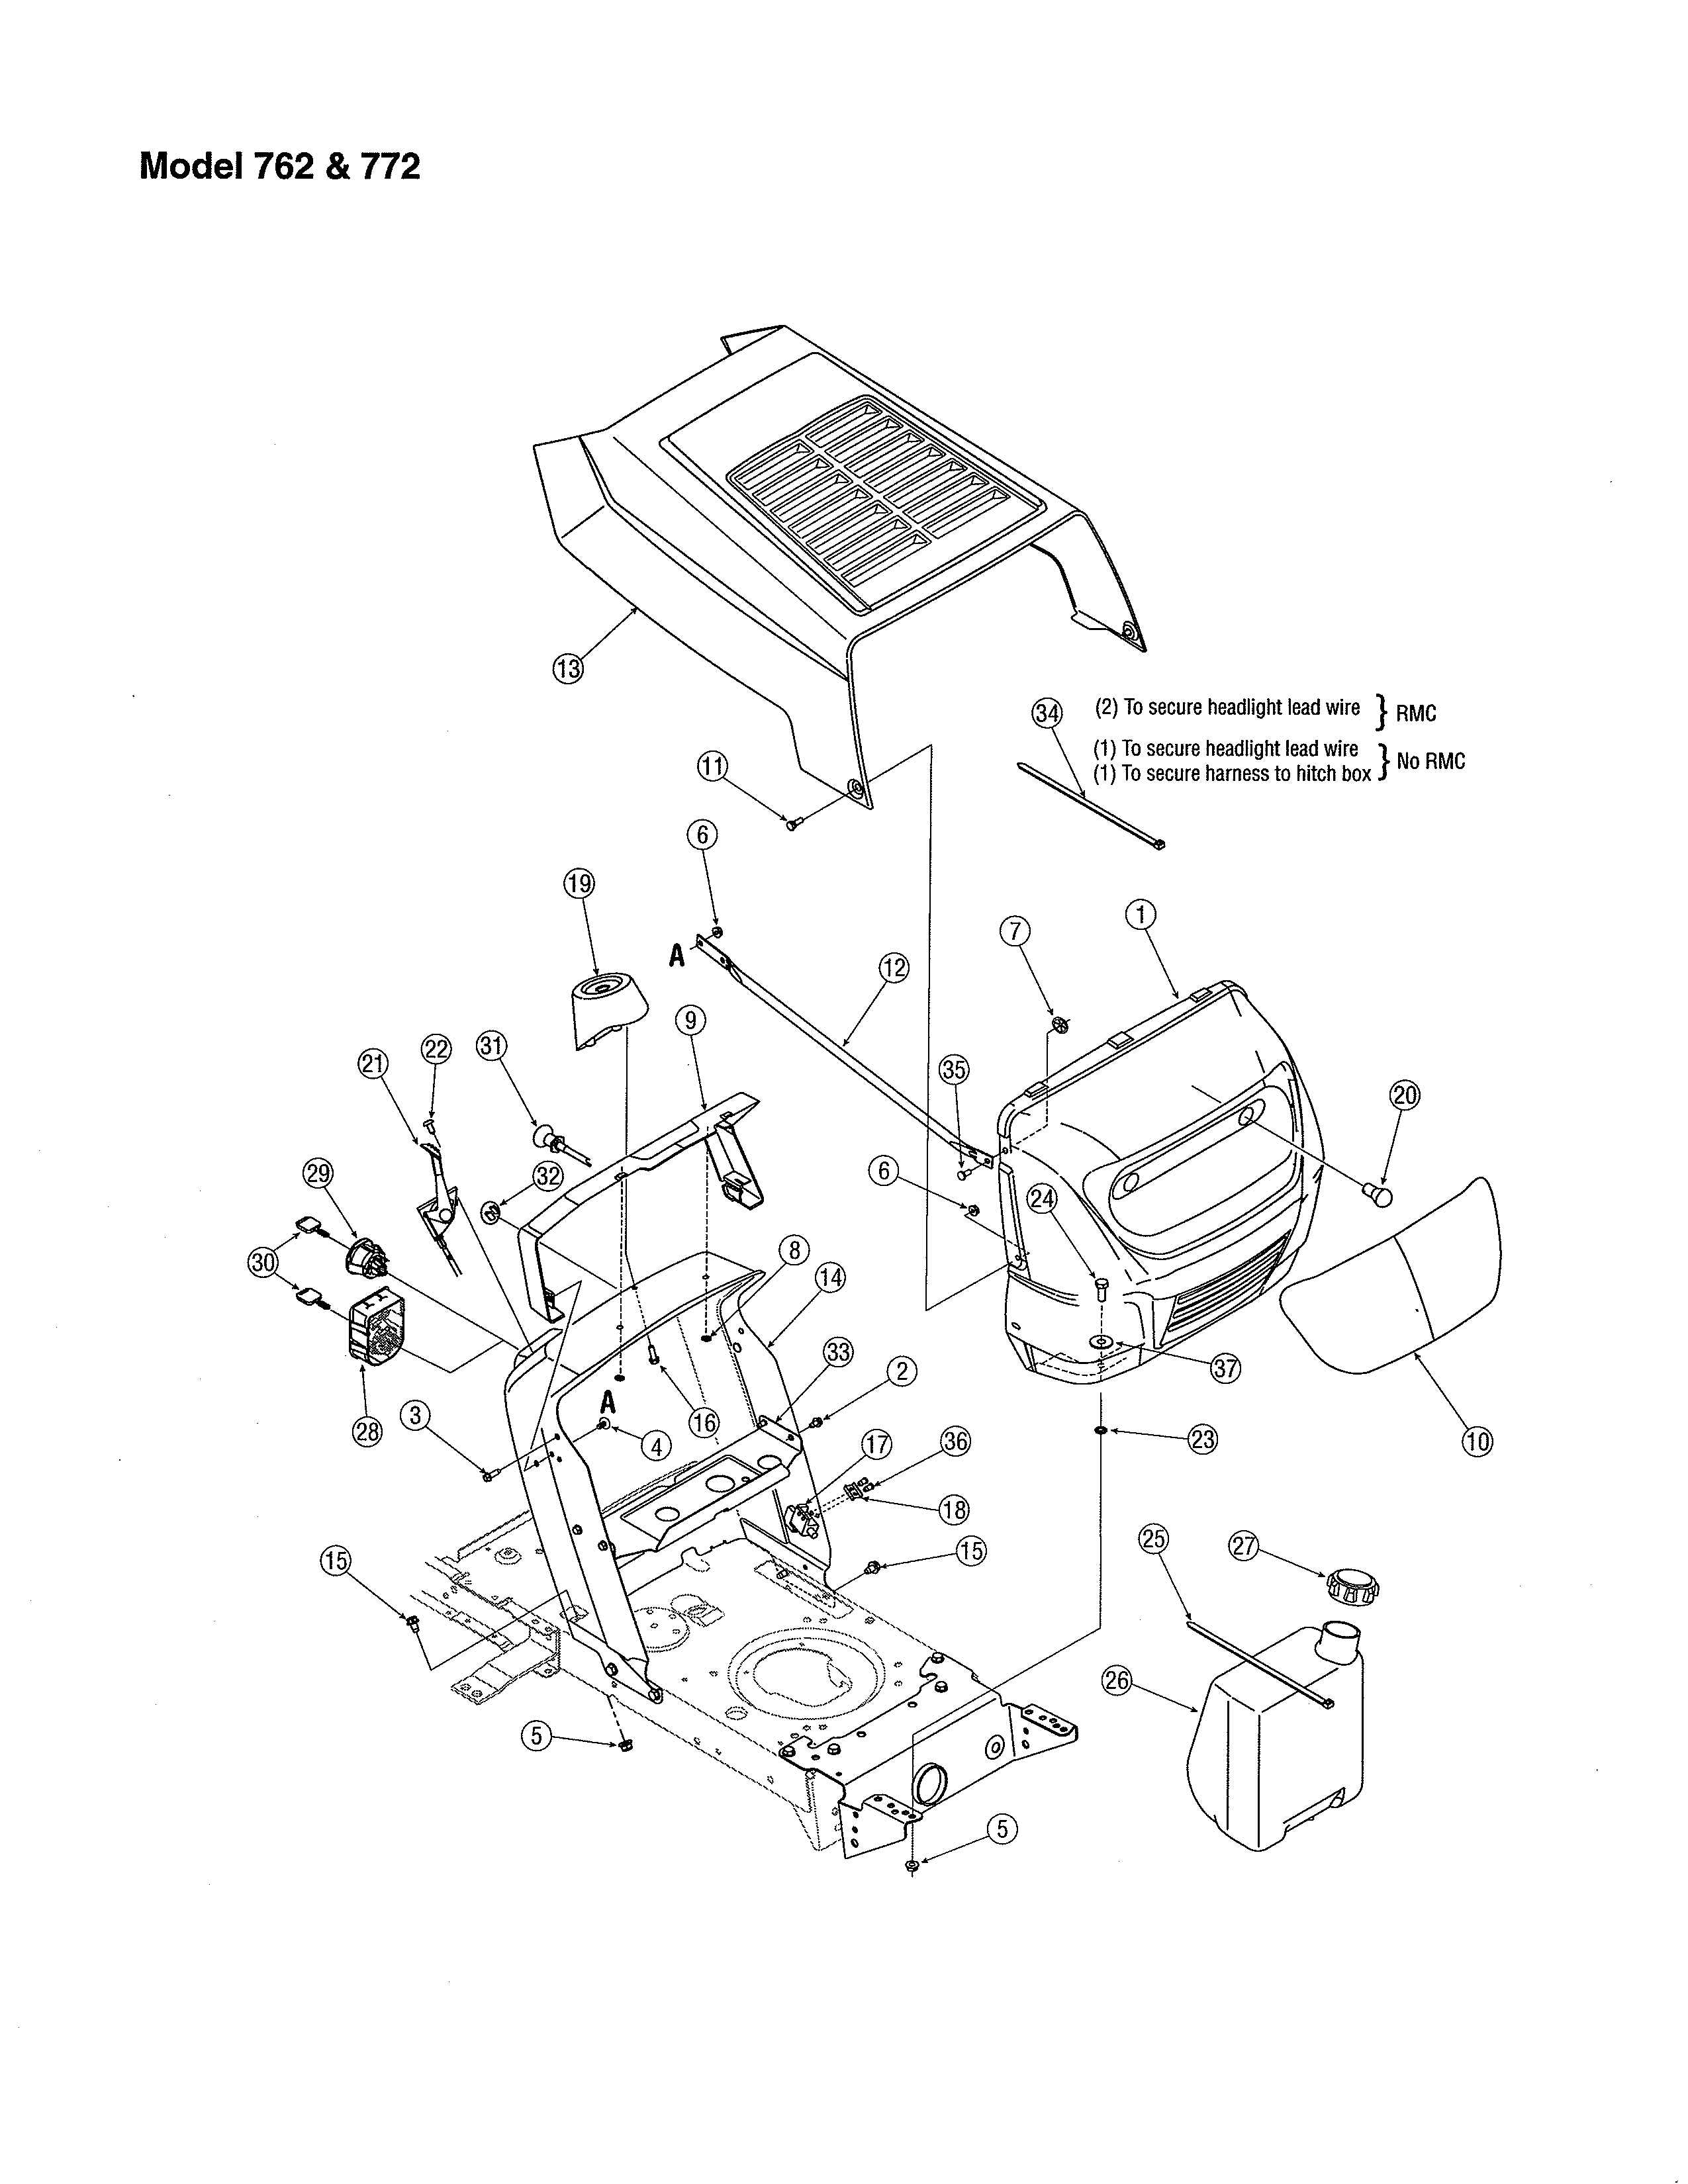 Yardman Lawn Mower Parts Diagram - Drivenheisenberg